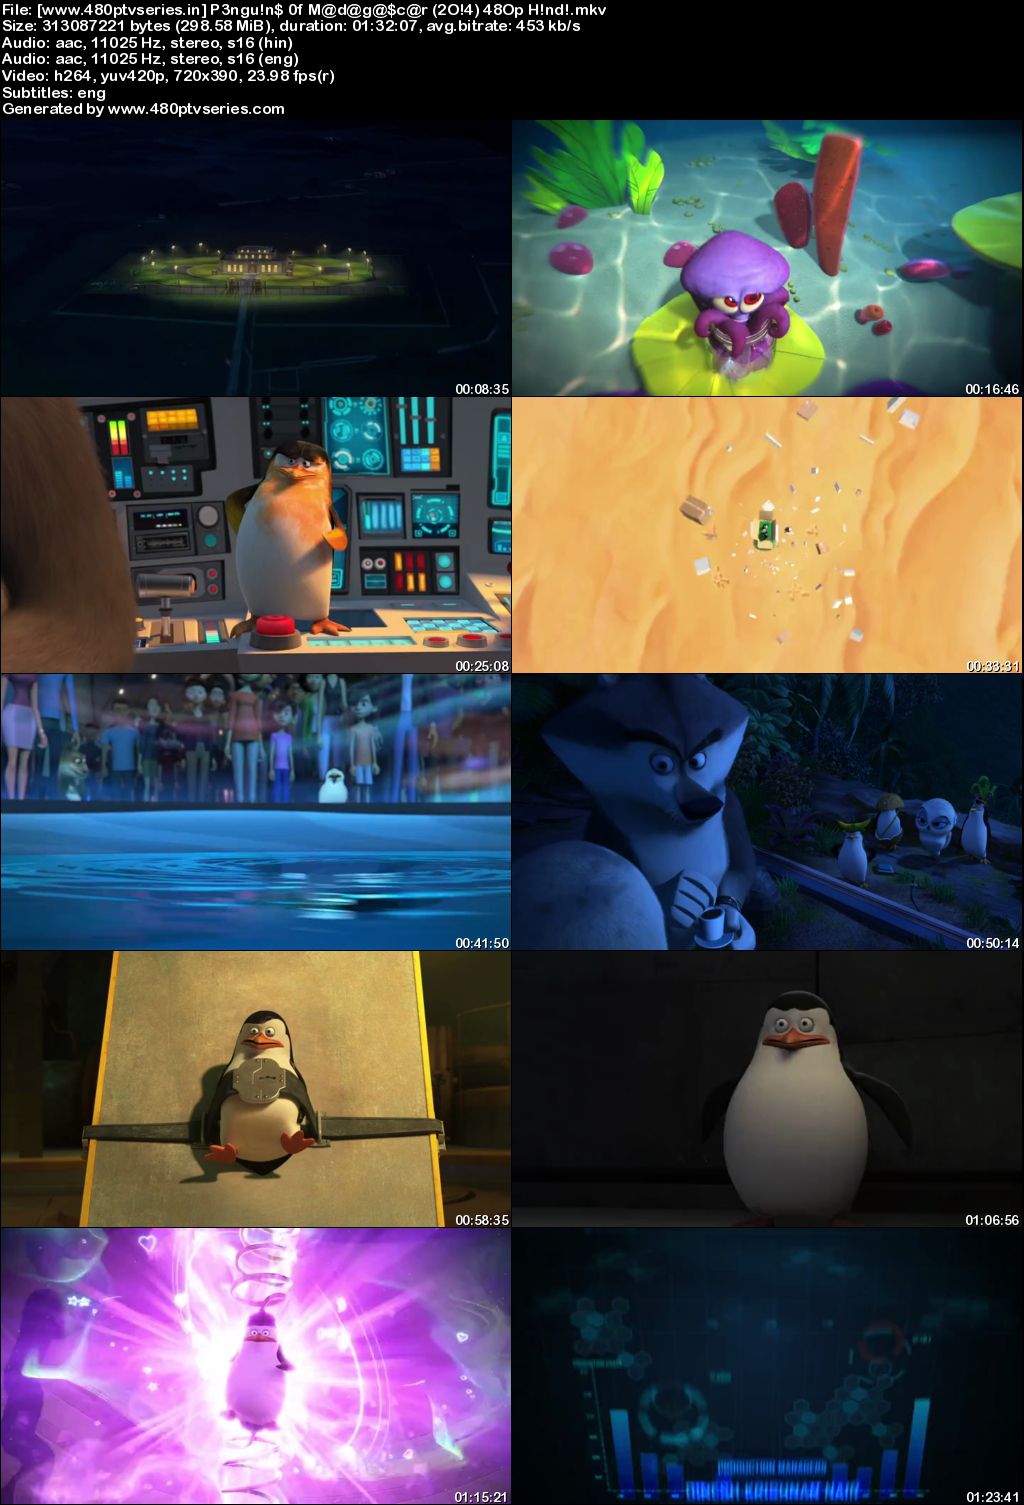 Penguins of Madagascar (2014) 300MB Full Hindi Dual Audio Movie Download 480p Bluray Free Watch Online Full Movie Download Worldfree4u 9xmovies